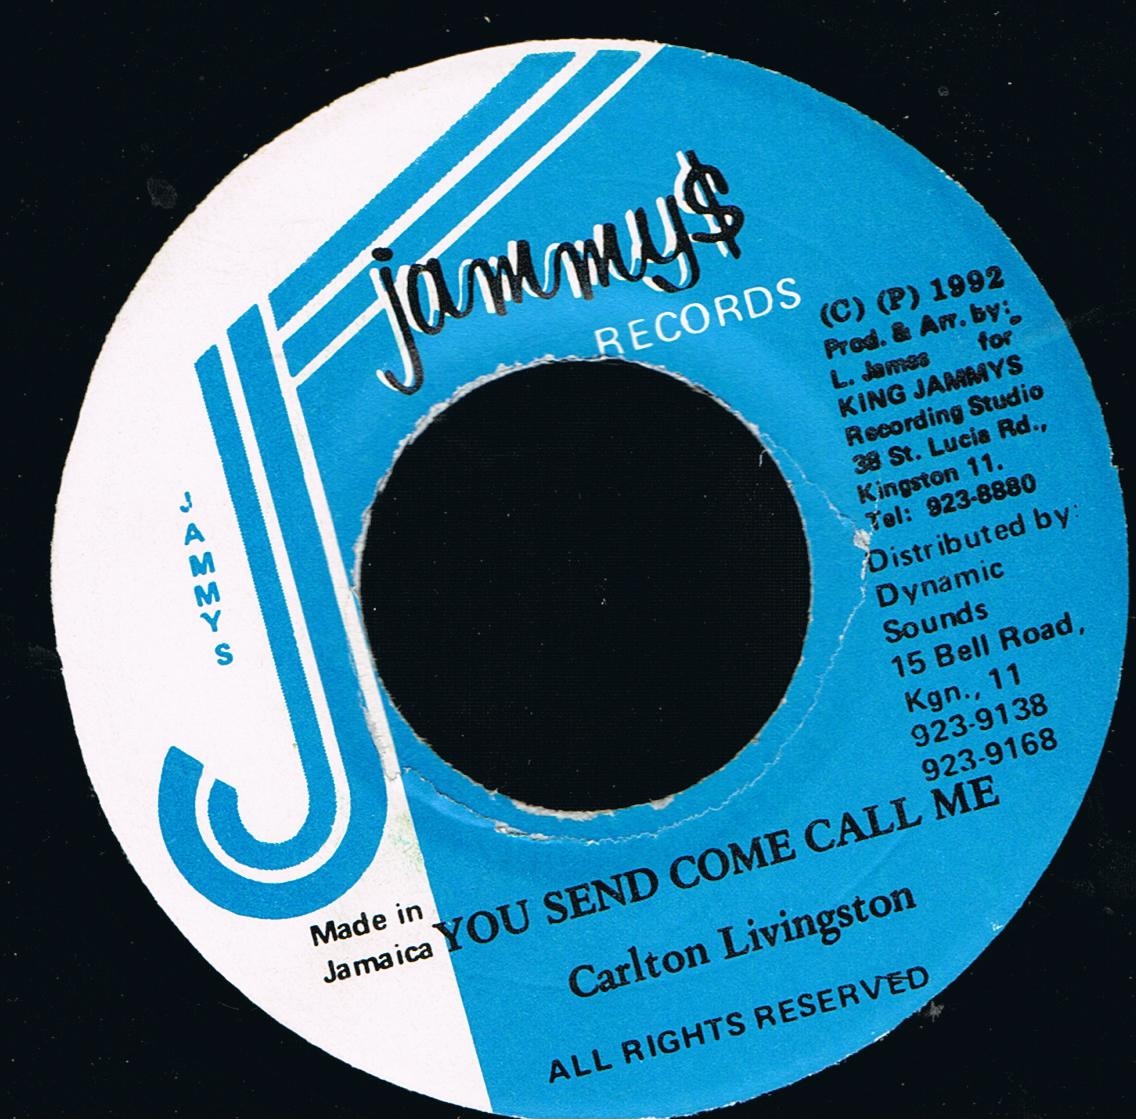 Carlton Livingston - You Send Come Call Me (7")